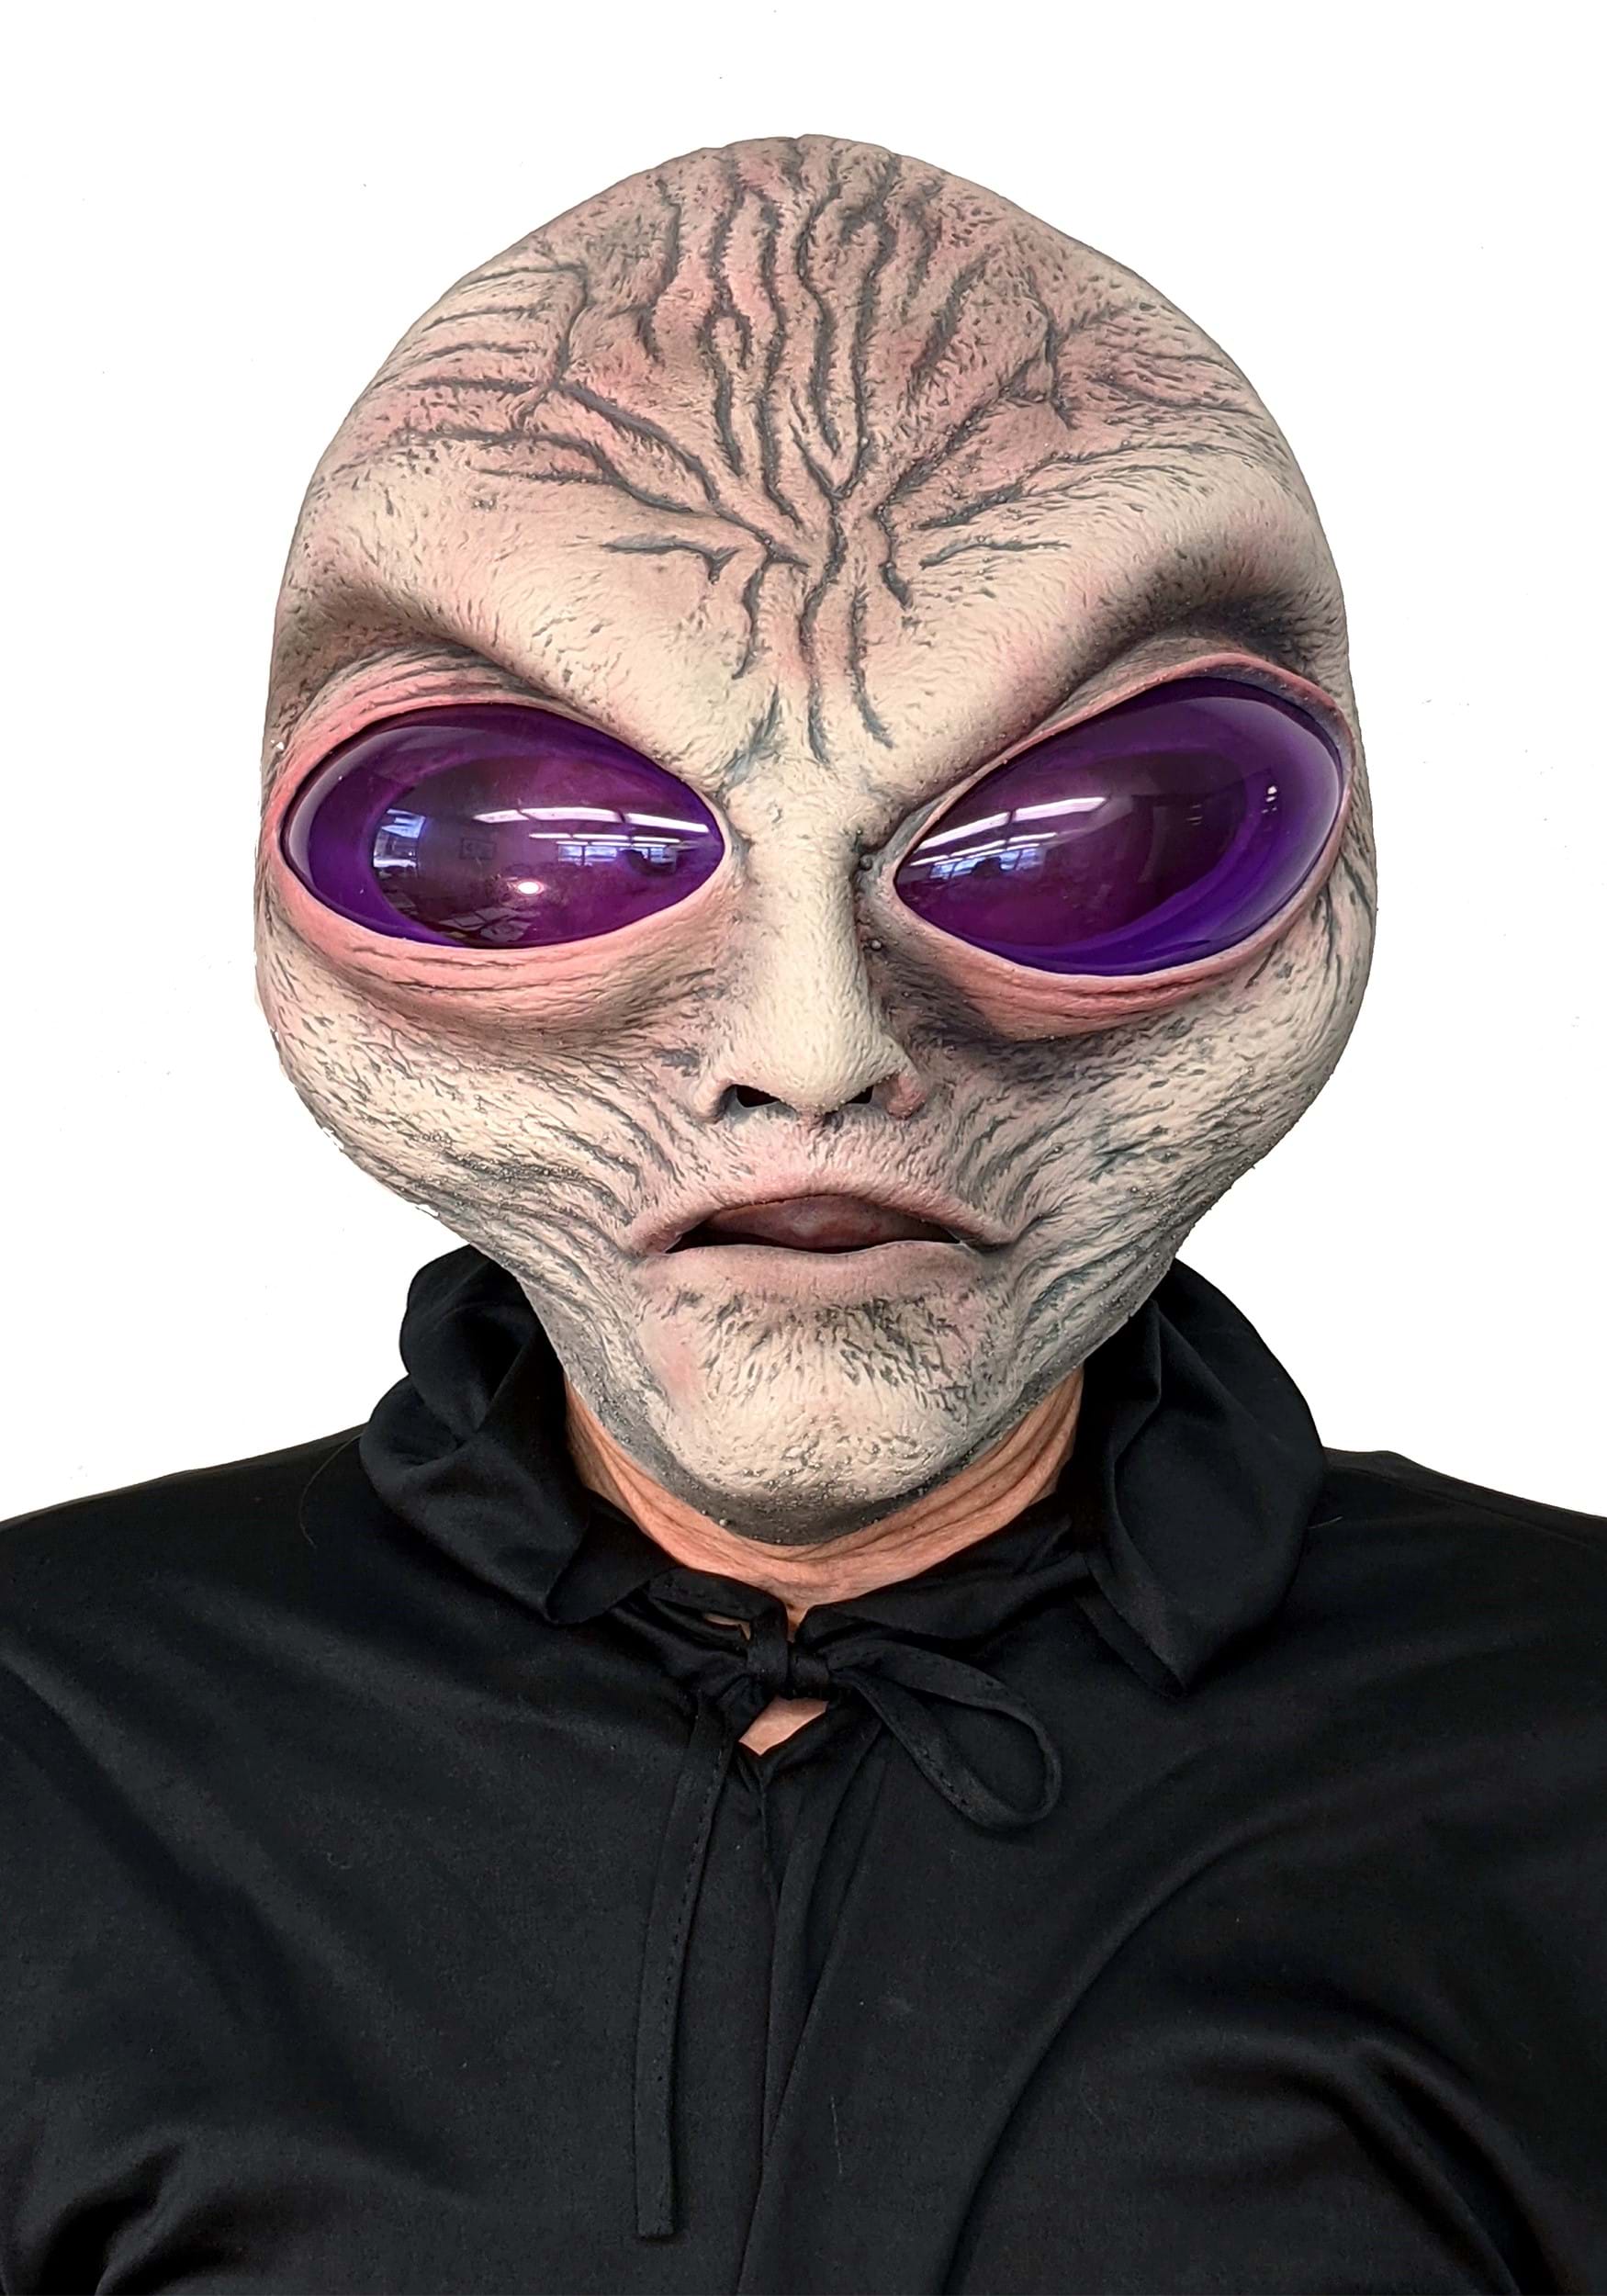 Grey Alien Adult Mask